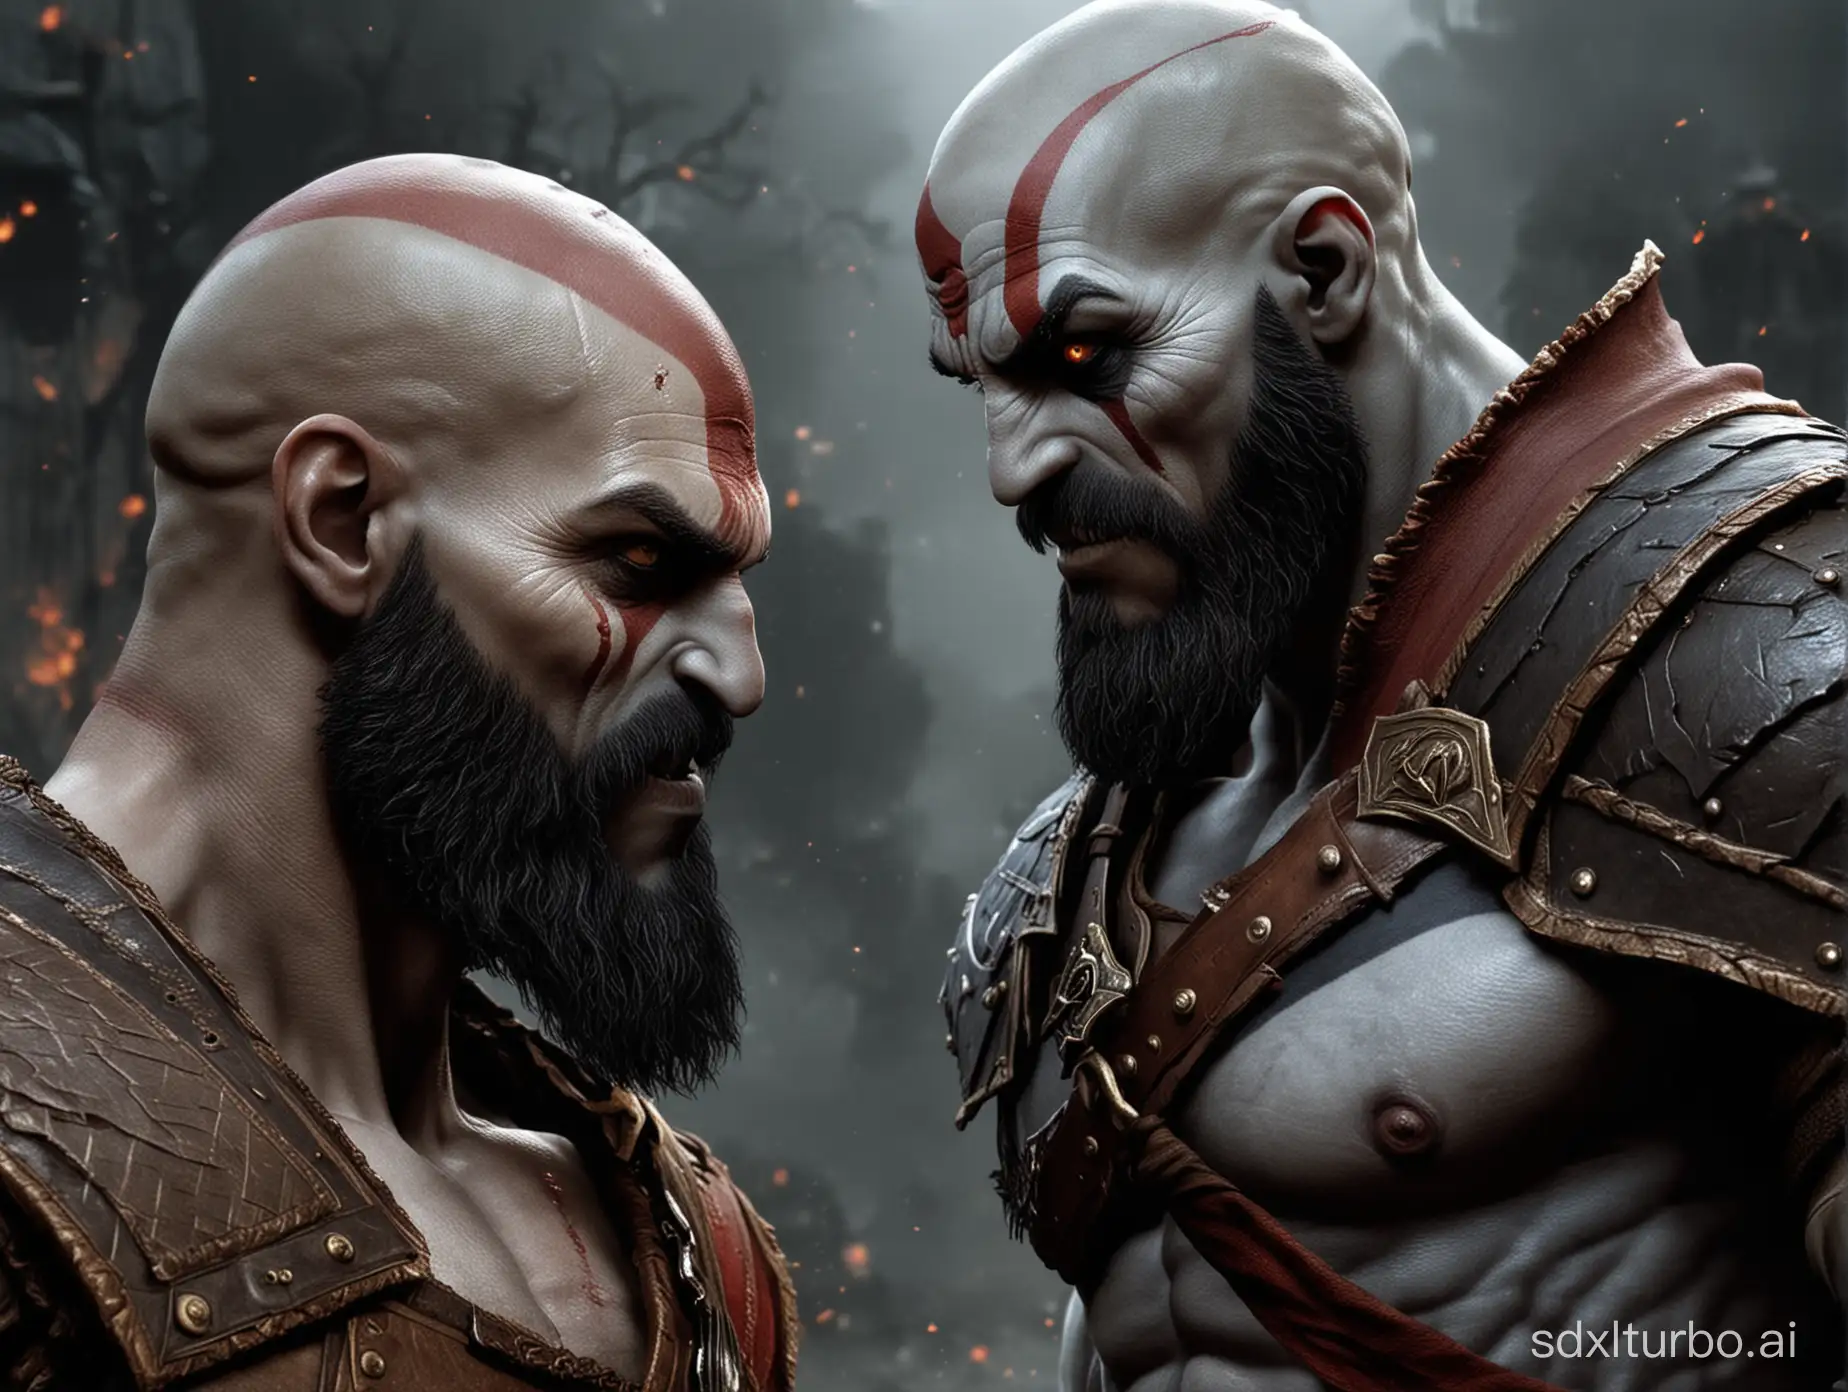 Kratos the god of war became a demoni and destro all
